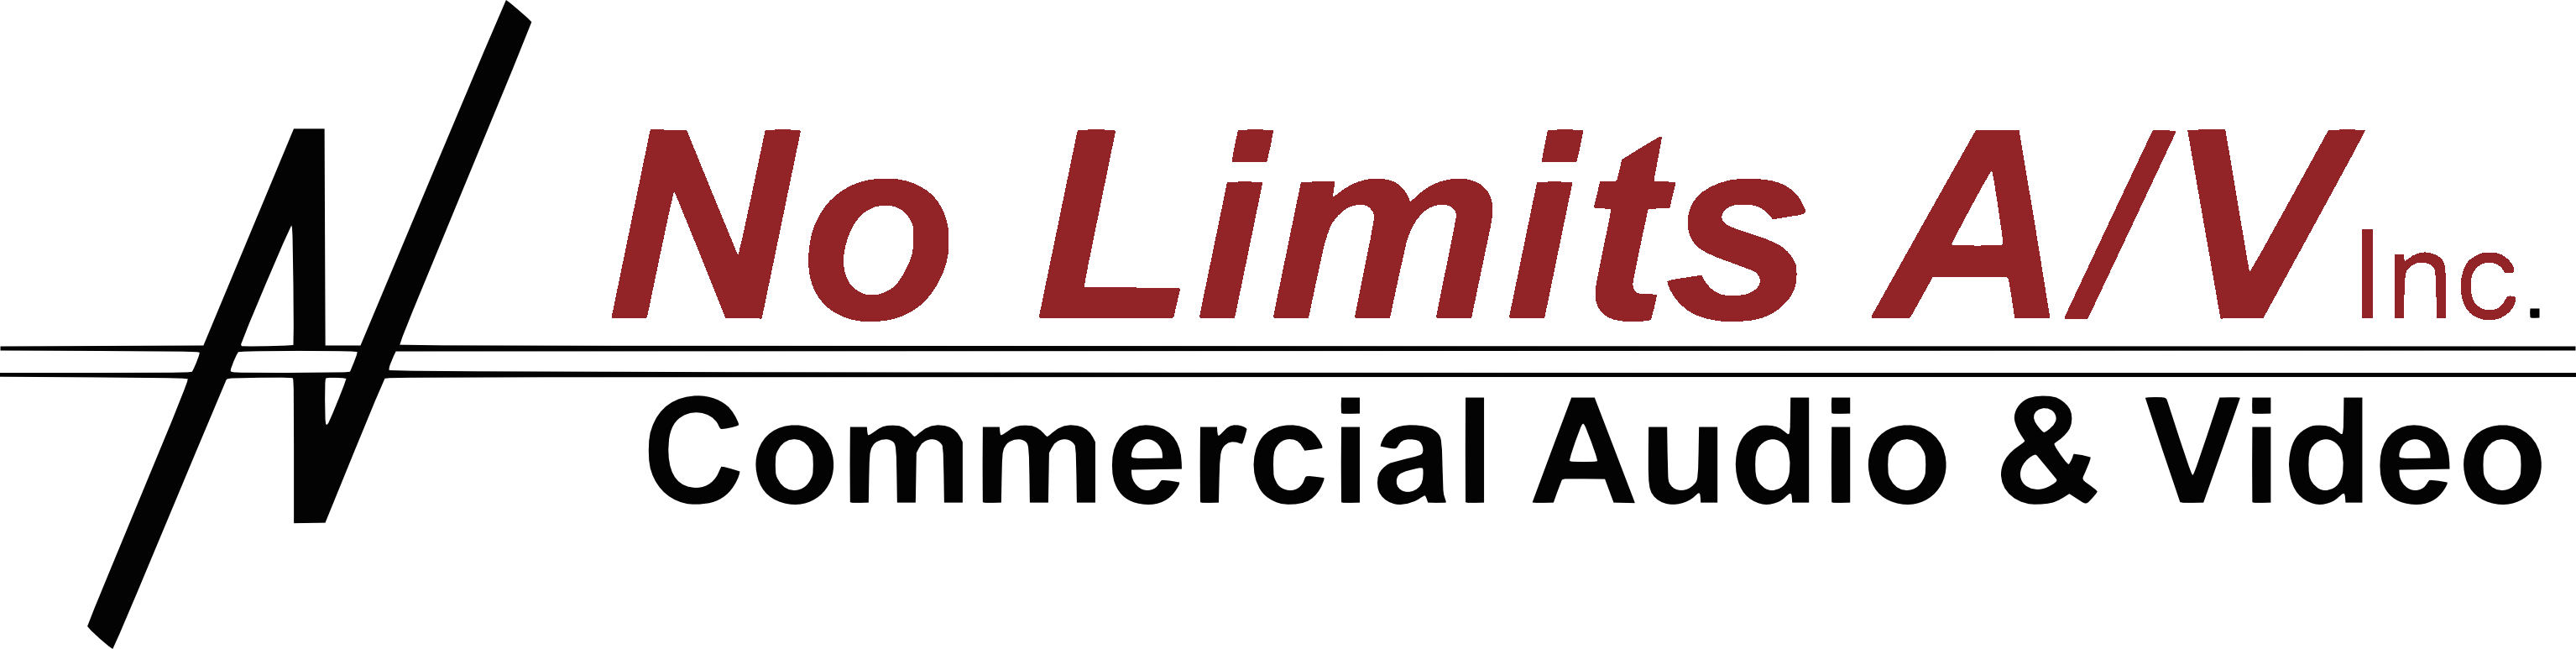 No Limits audio video logo